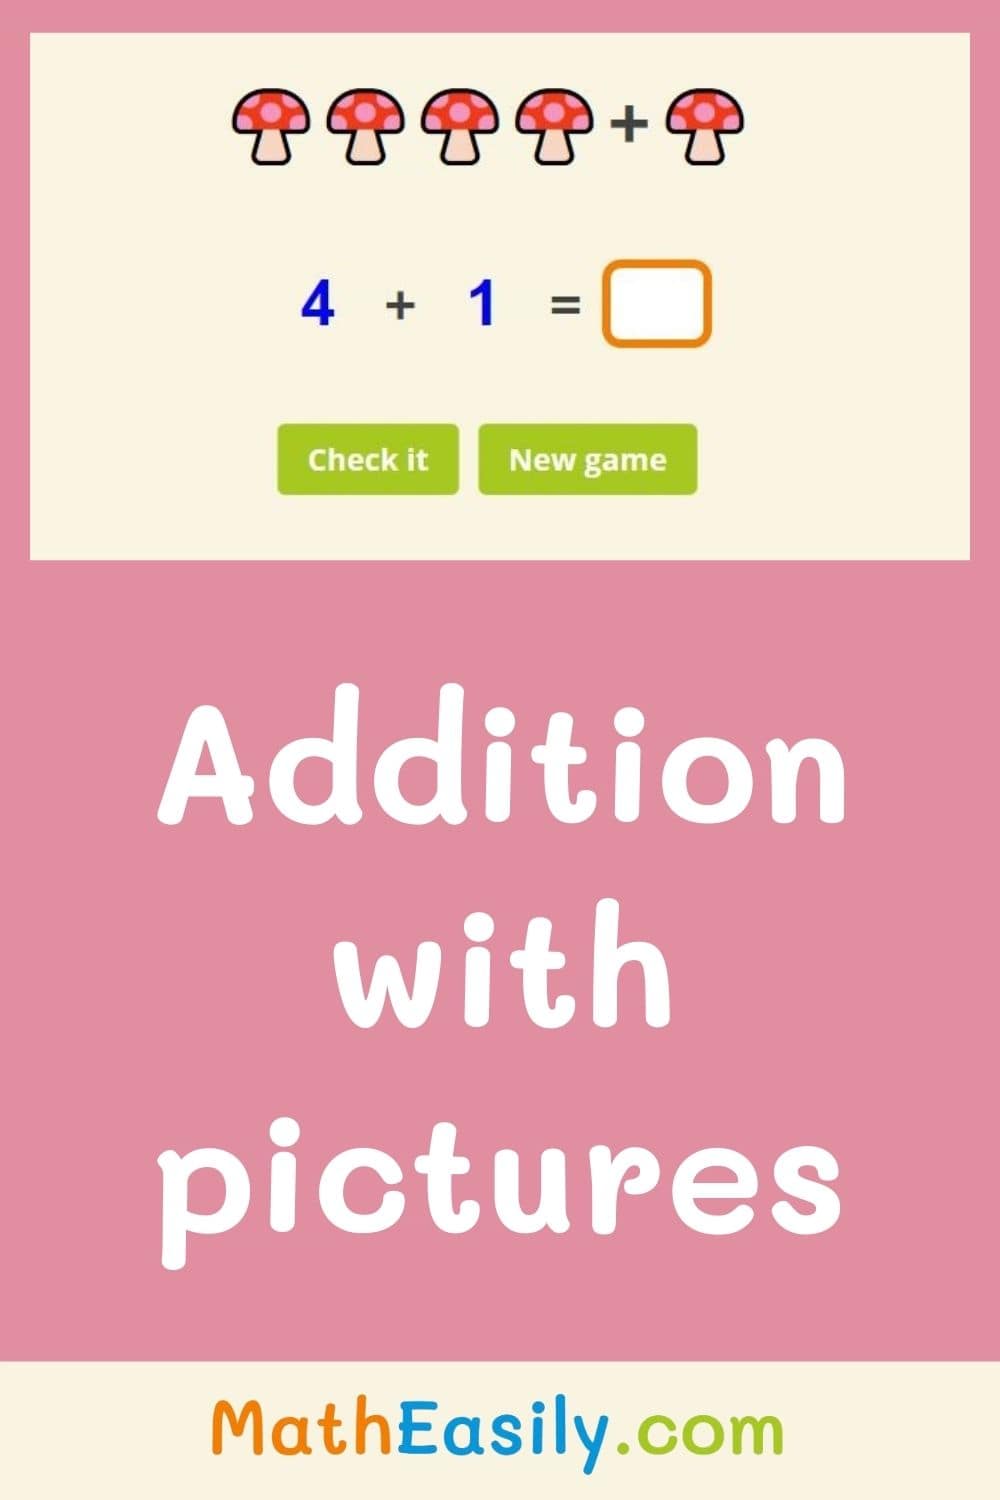 Adding to 10 games online. Single digit addition with pictures. Single digit addition game. 
Addition games for kindergarten. Simple addition game.